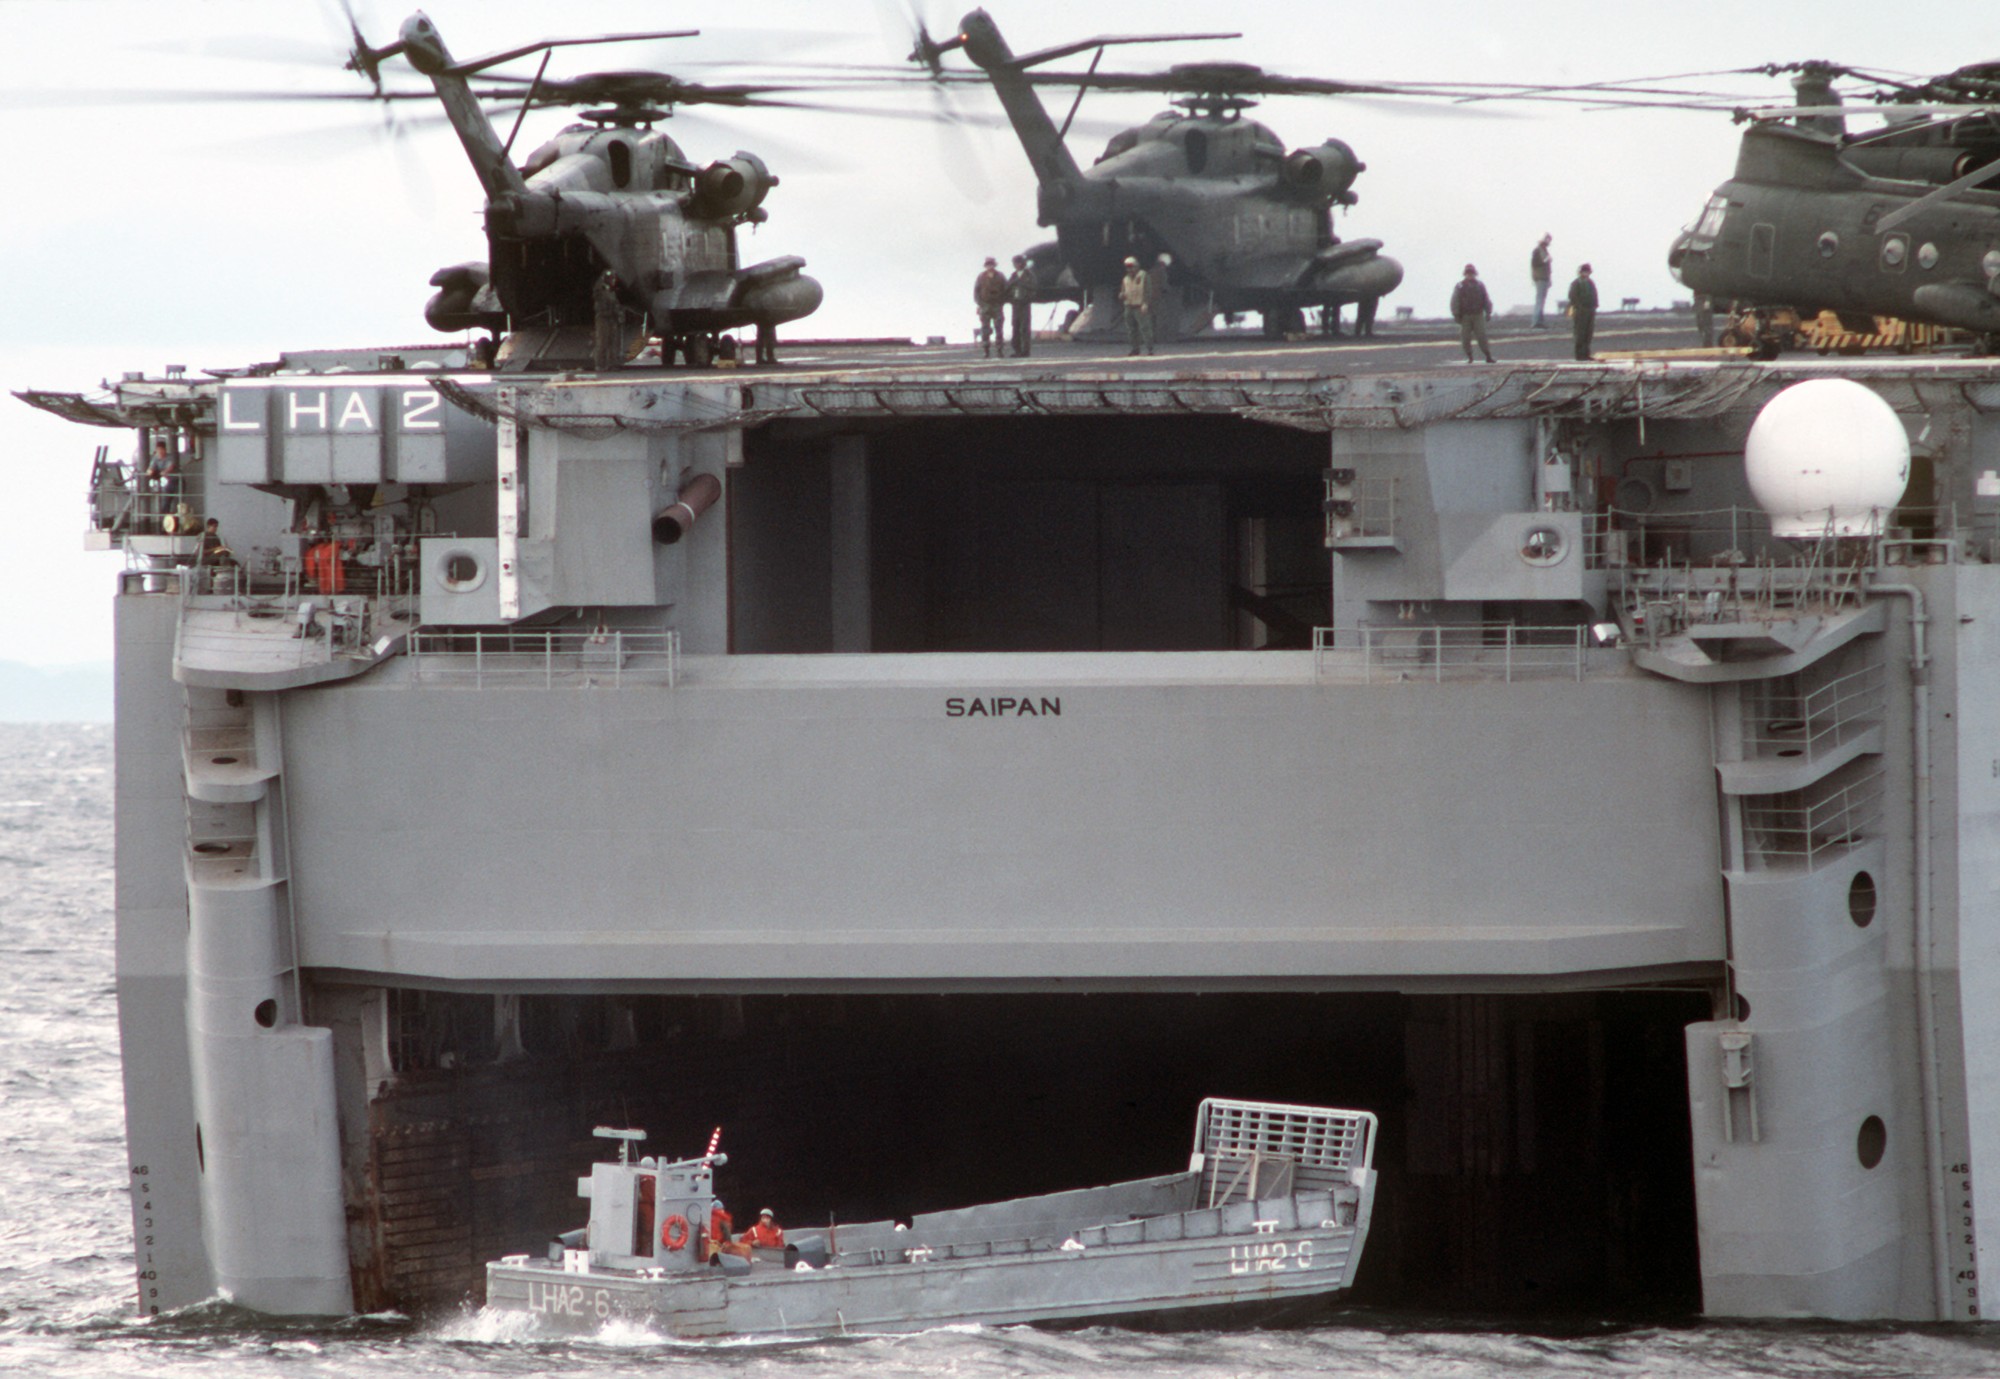 lha-2 uss saipan tarawa class amphibious assault ship us navy 22nd mau hmm-162 usmc nato exercise northern wedding 55